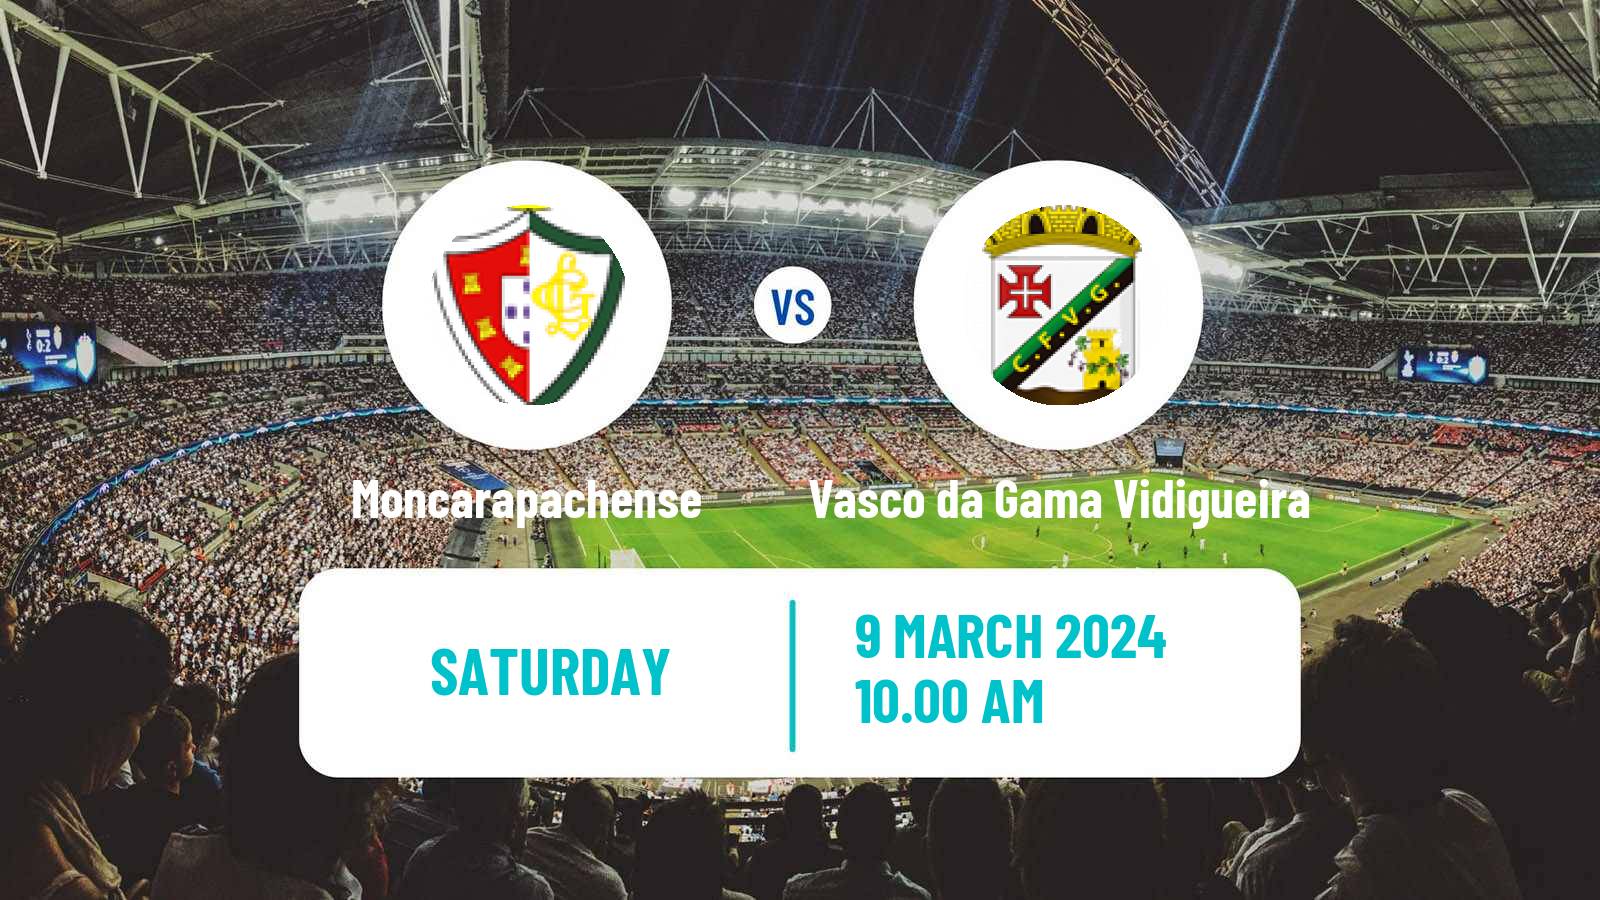 Soccer Campeonato de Portugal - Group D Moncarapachense - Vasco da Gama Vidigueira